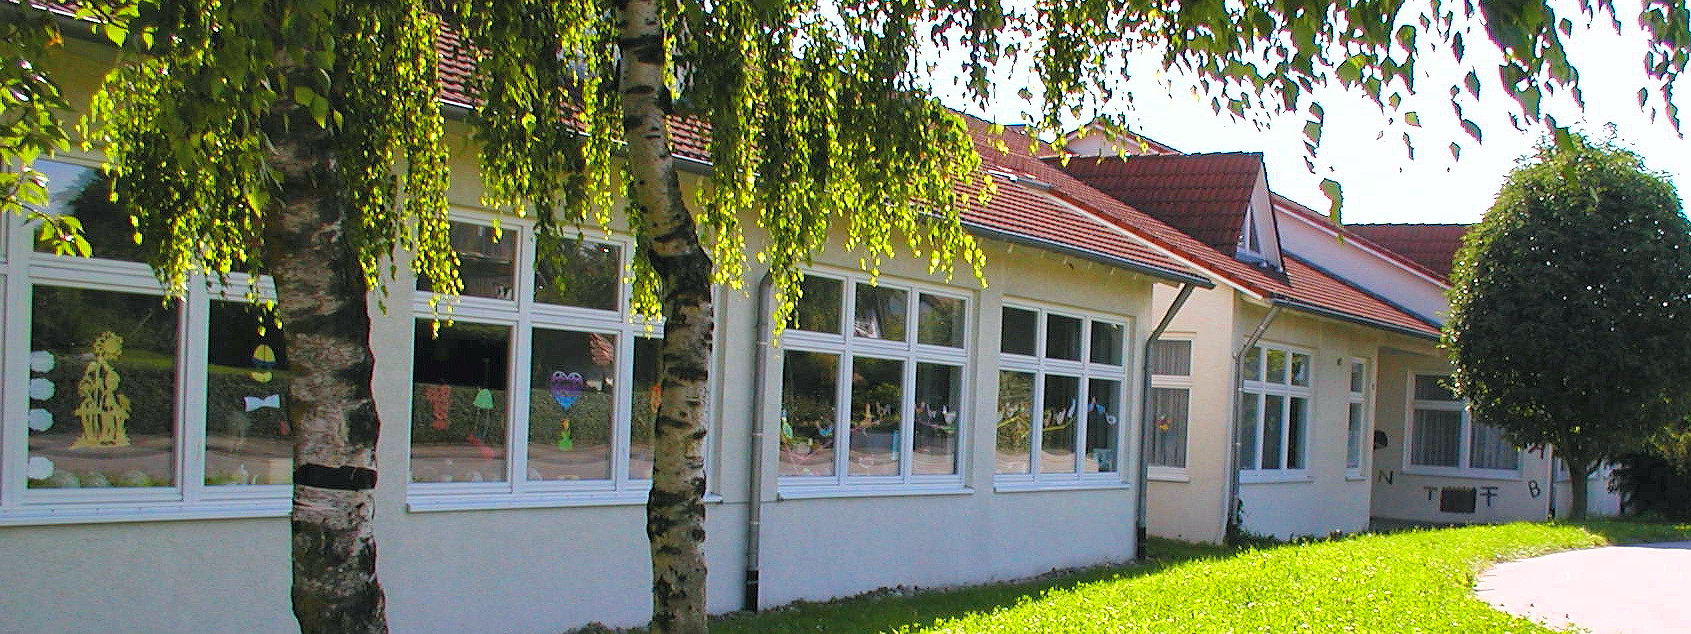  Grundschule Bitzfeld 